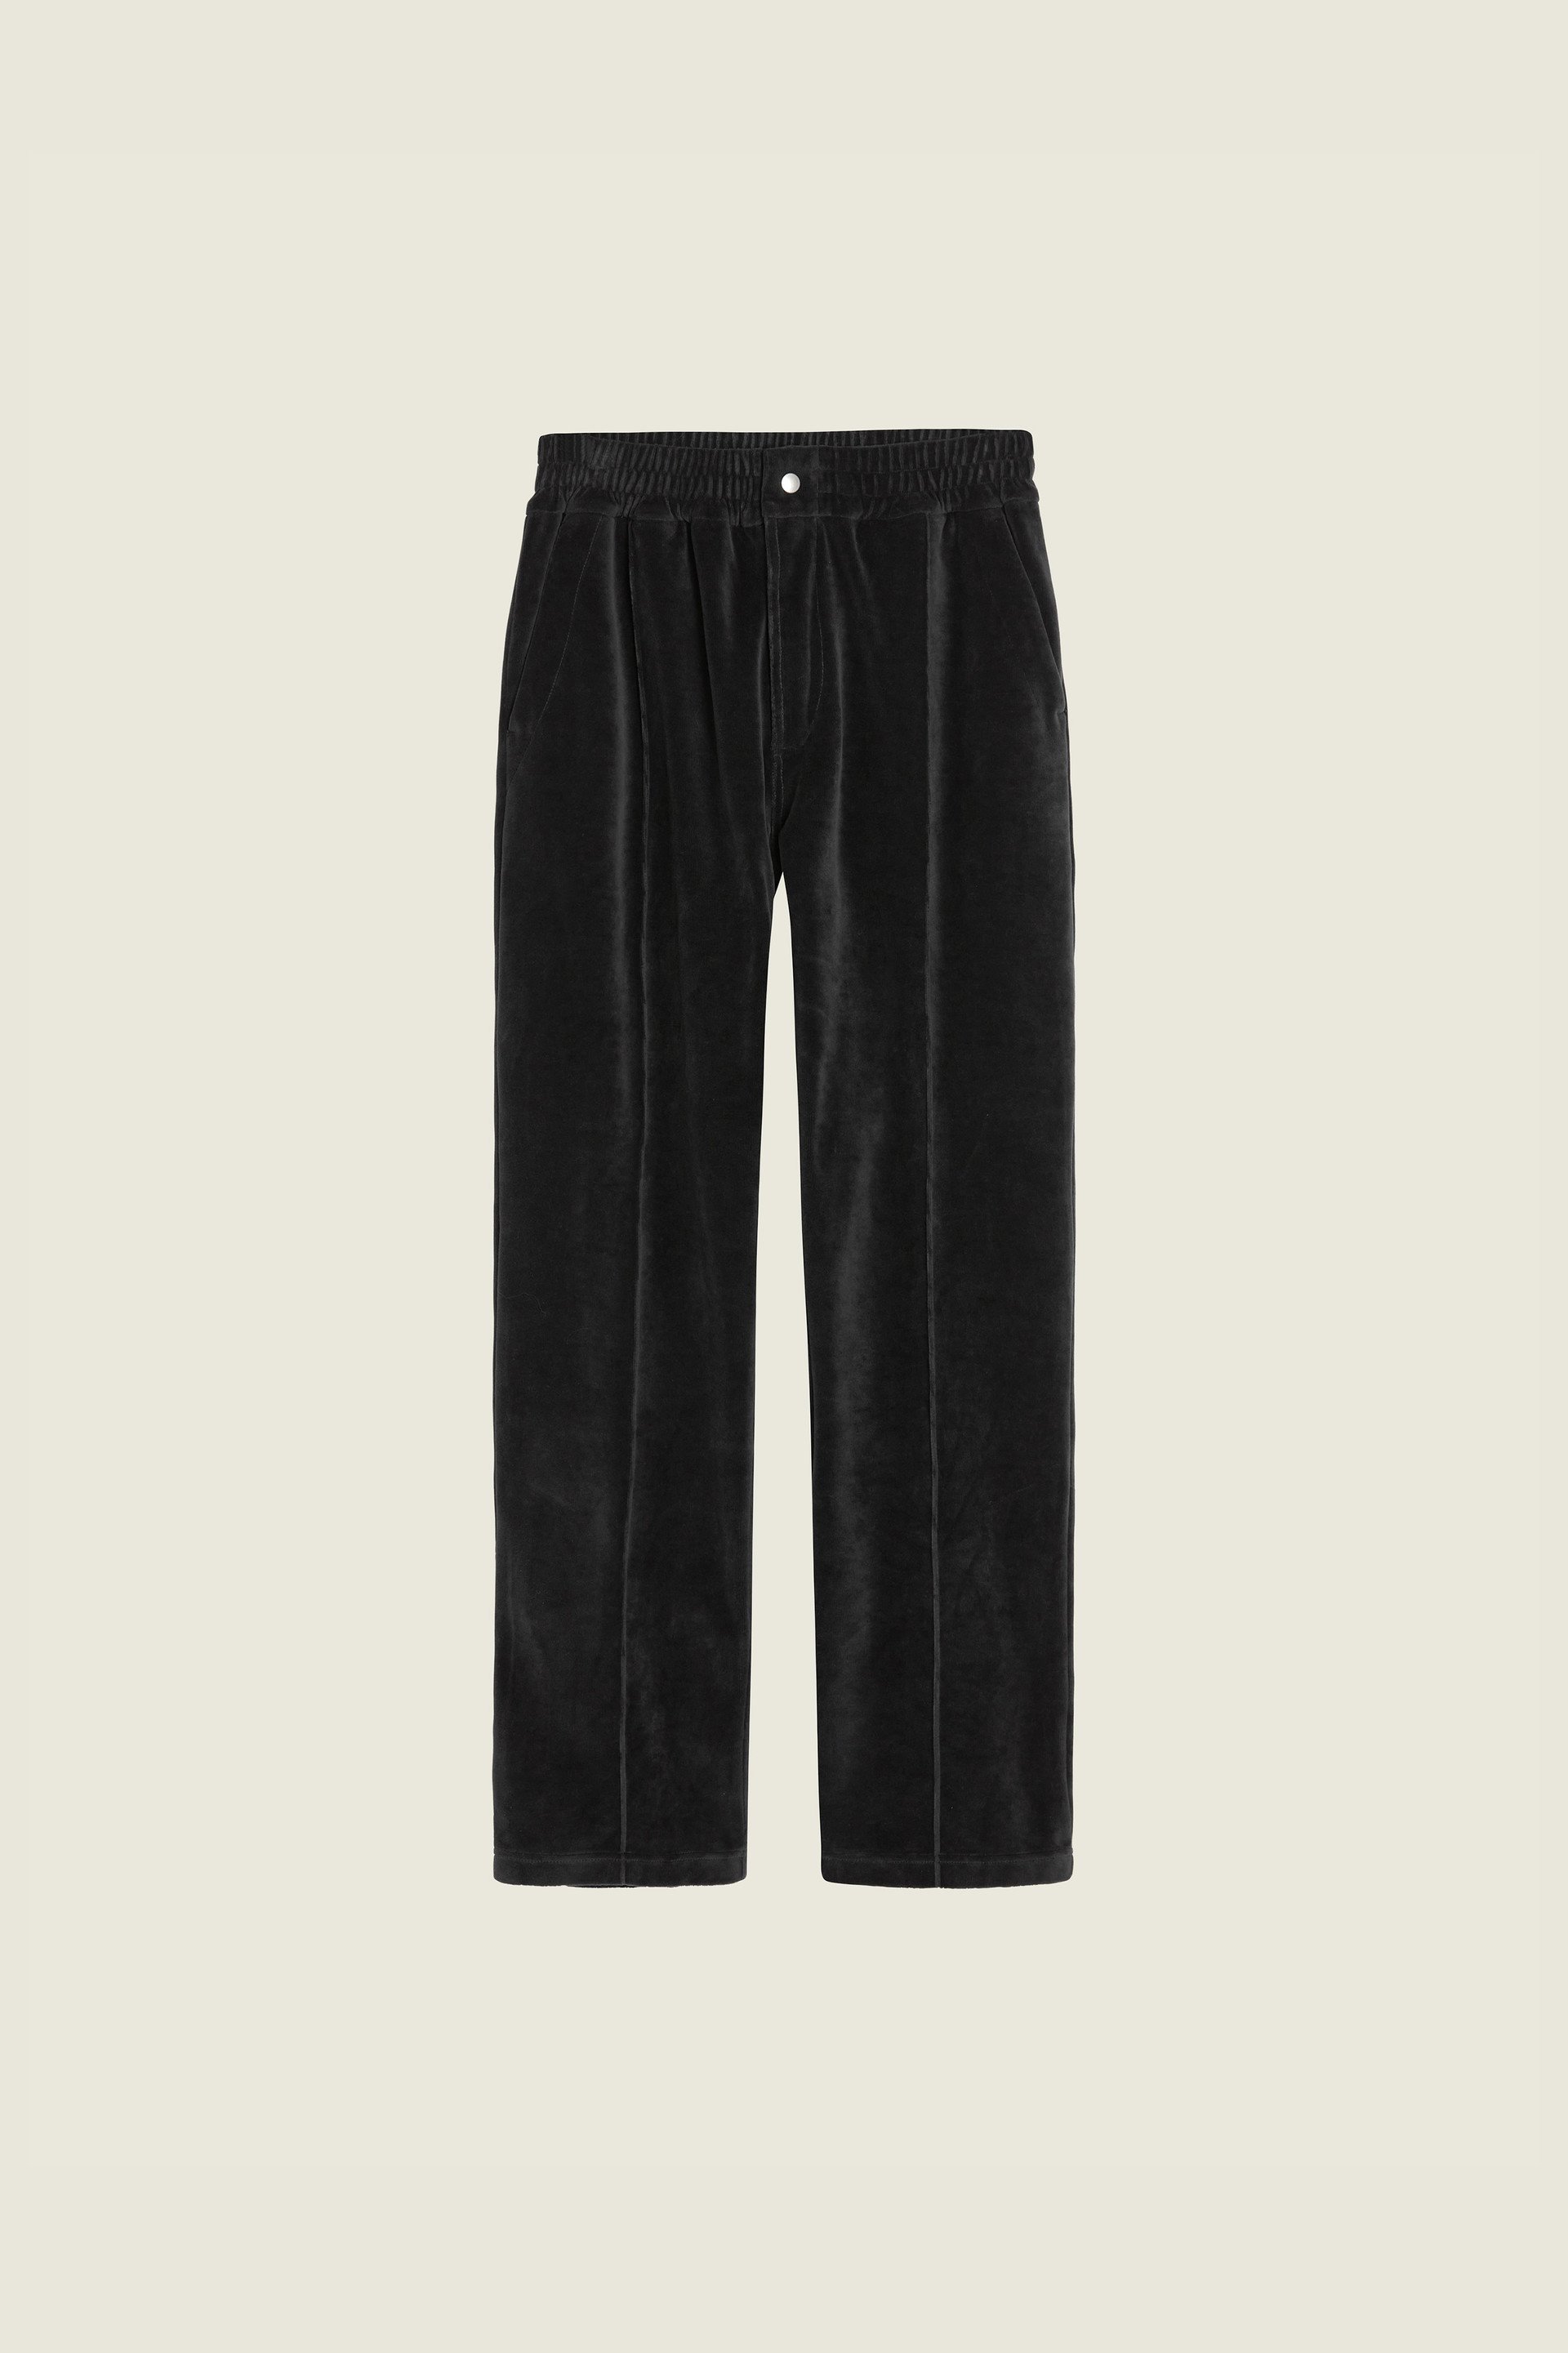 Dan Trousers - Black Velvet - Organic cotton - organic textile - Sézane